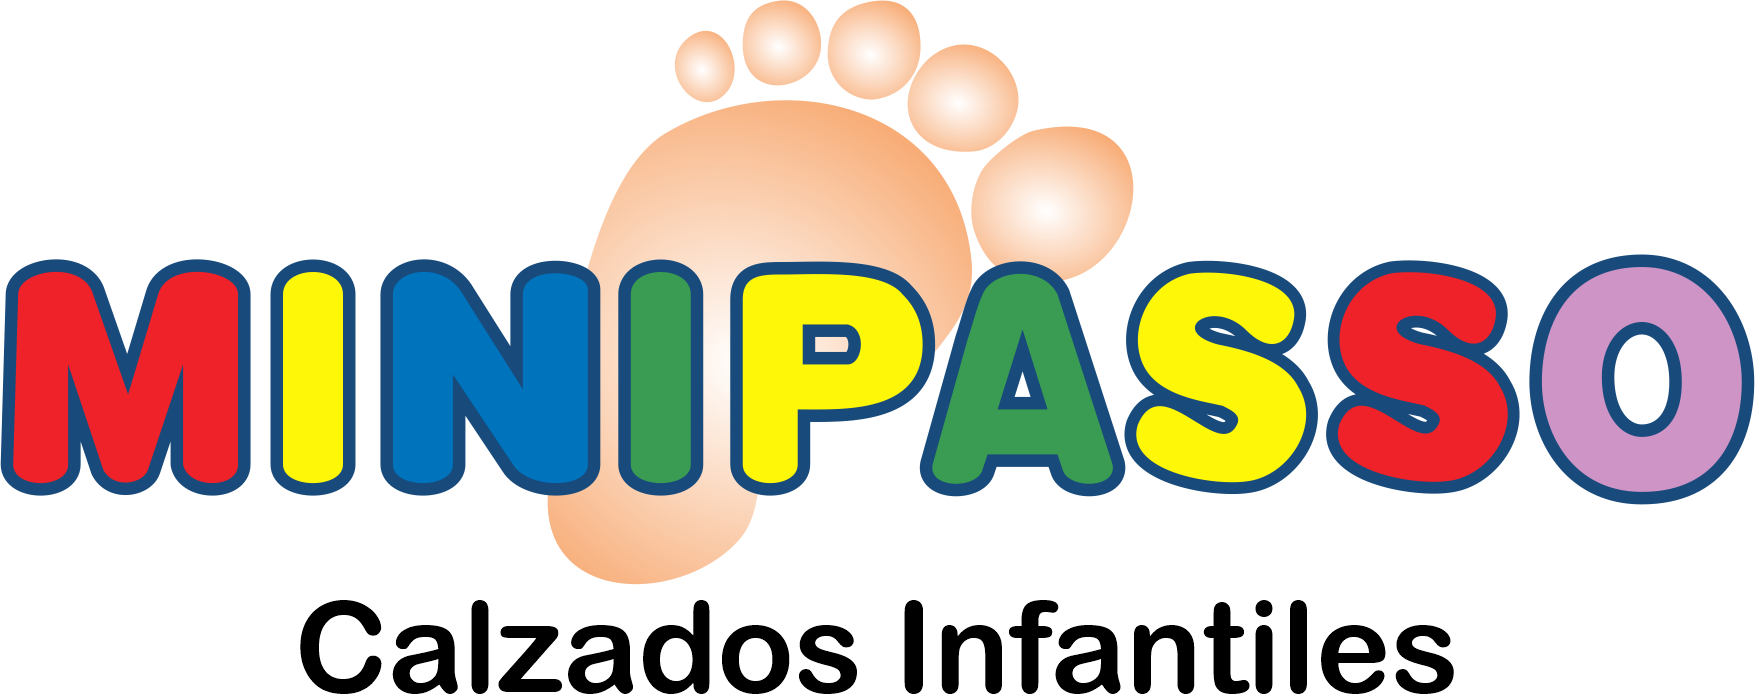 Logo Minipasso